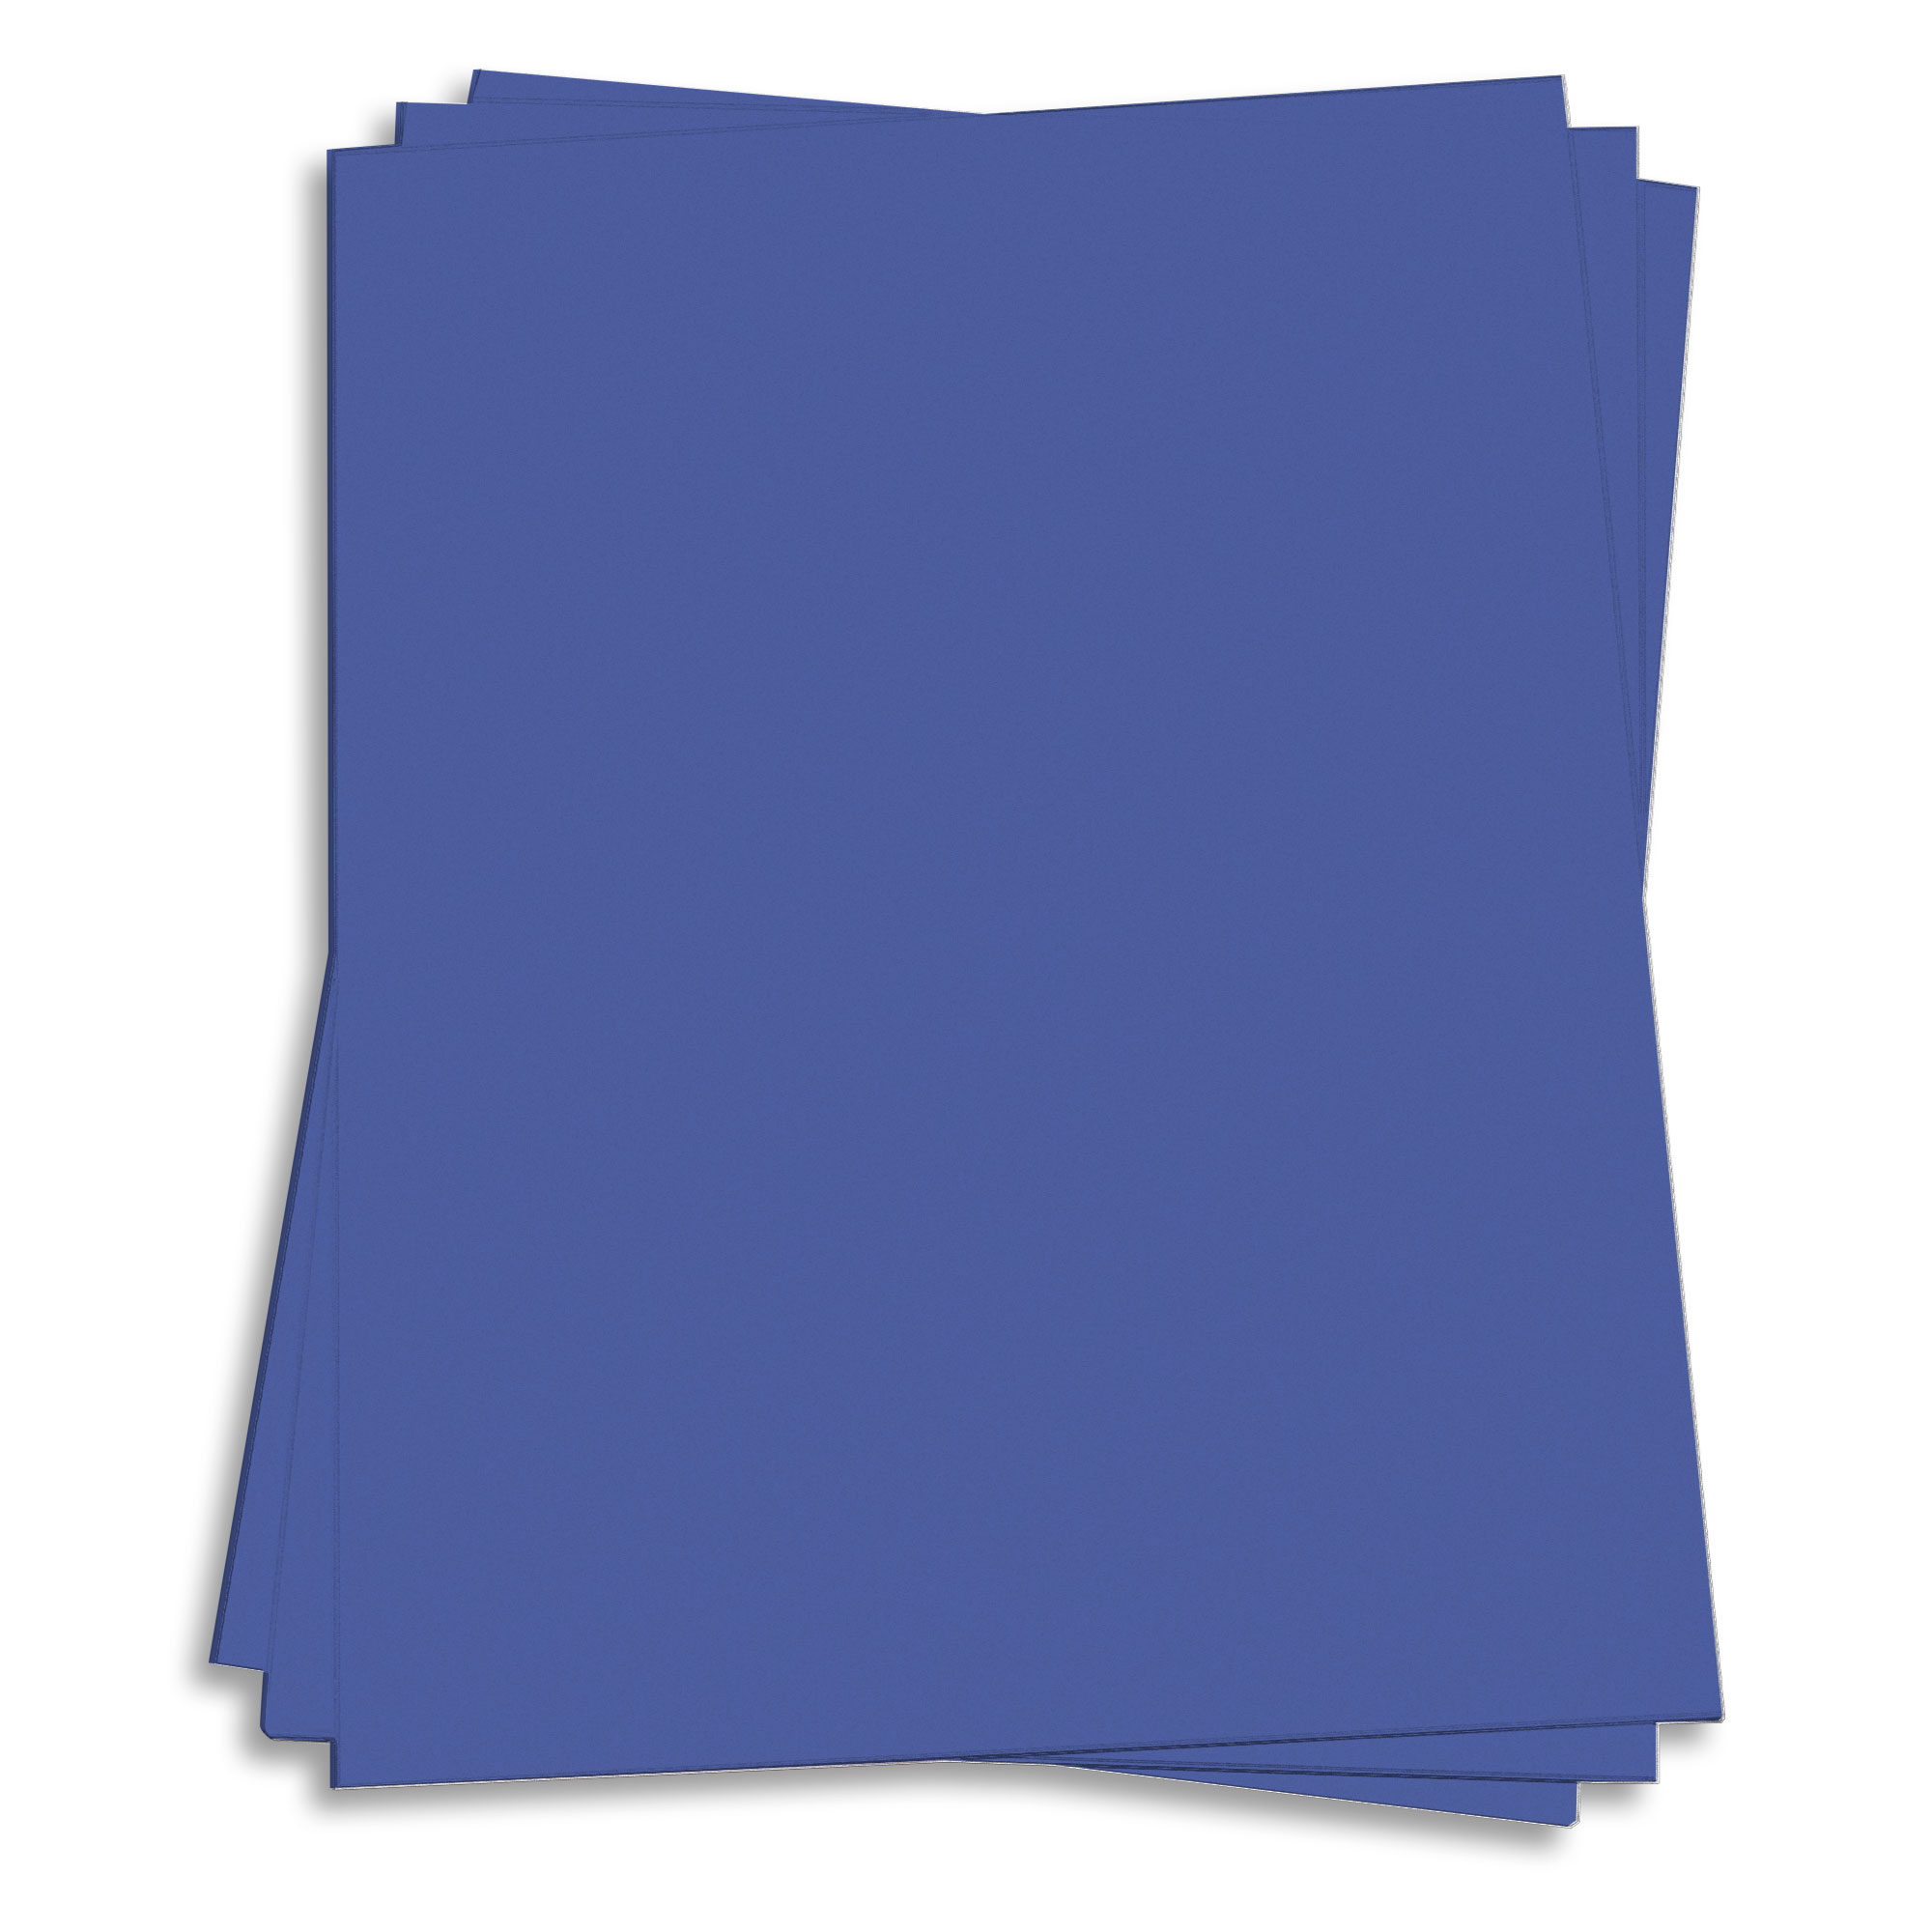 Blast-Off Blue Card Stock - 8 1/2 x 11 65lb Cover